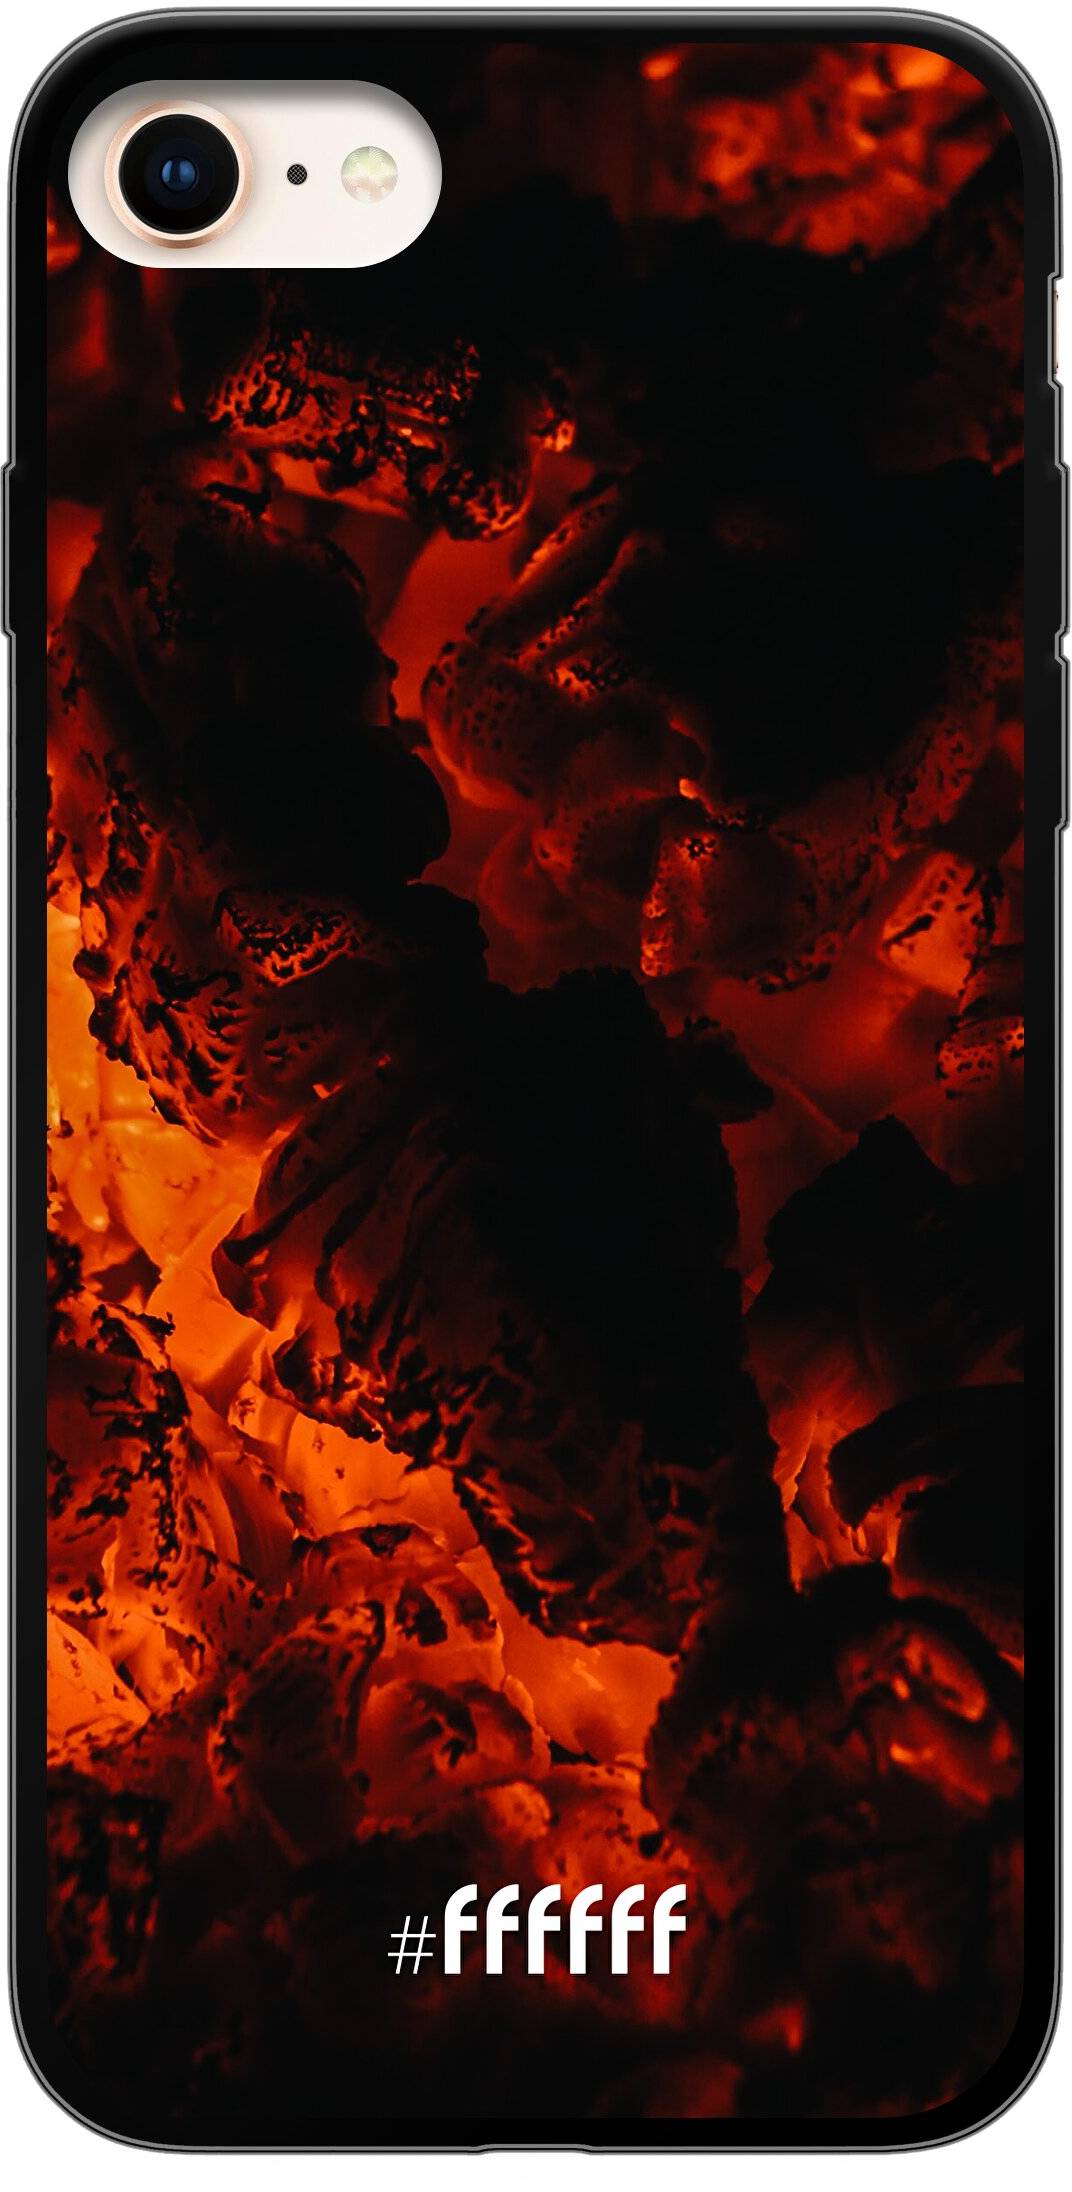 Hot Hot Hot iPhone 7